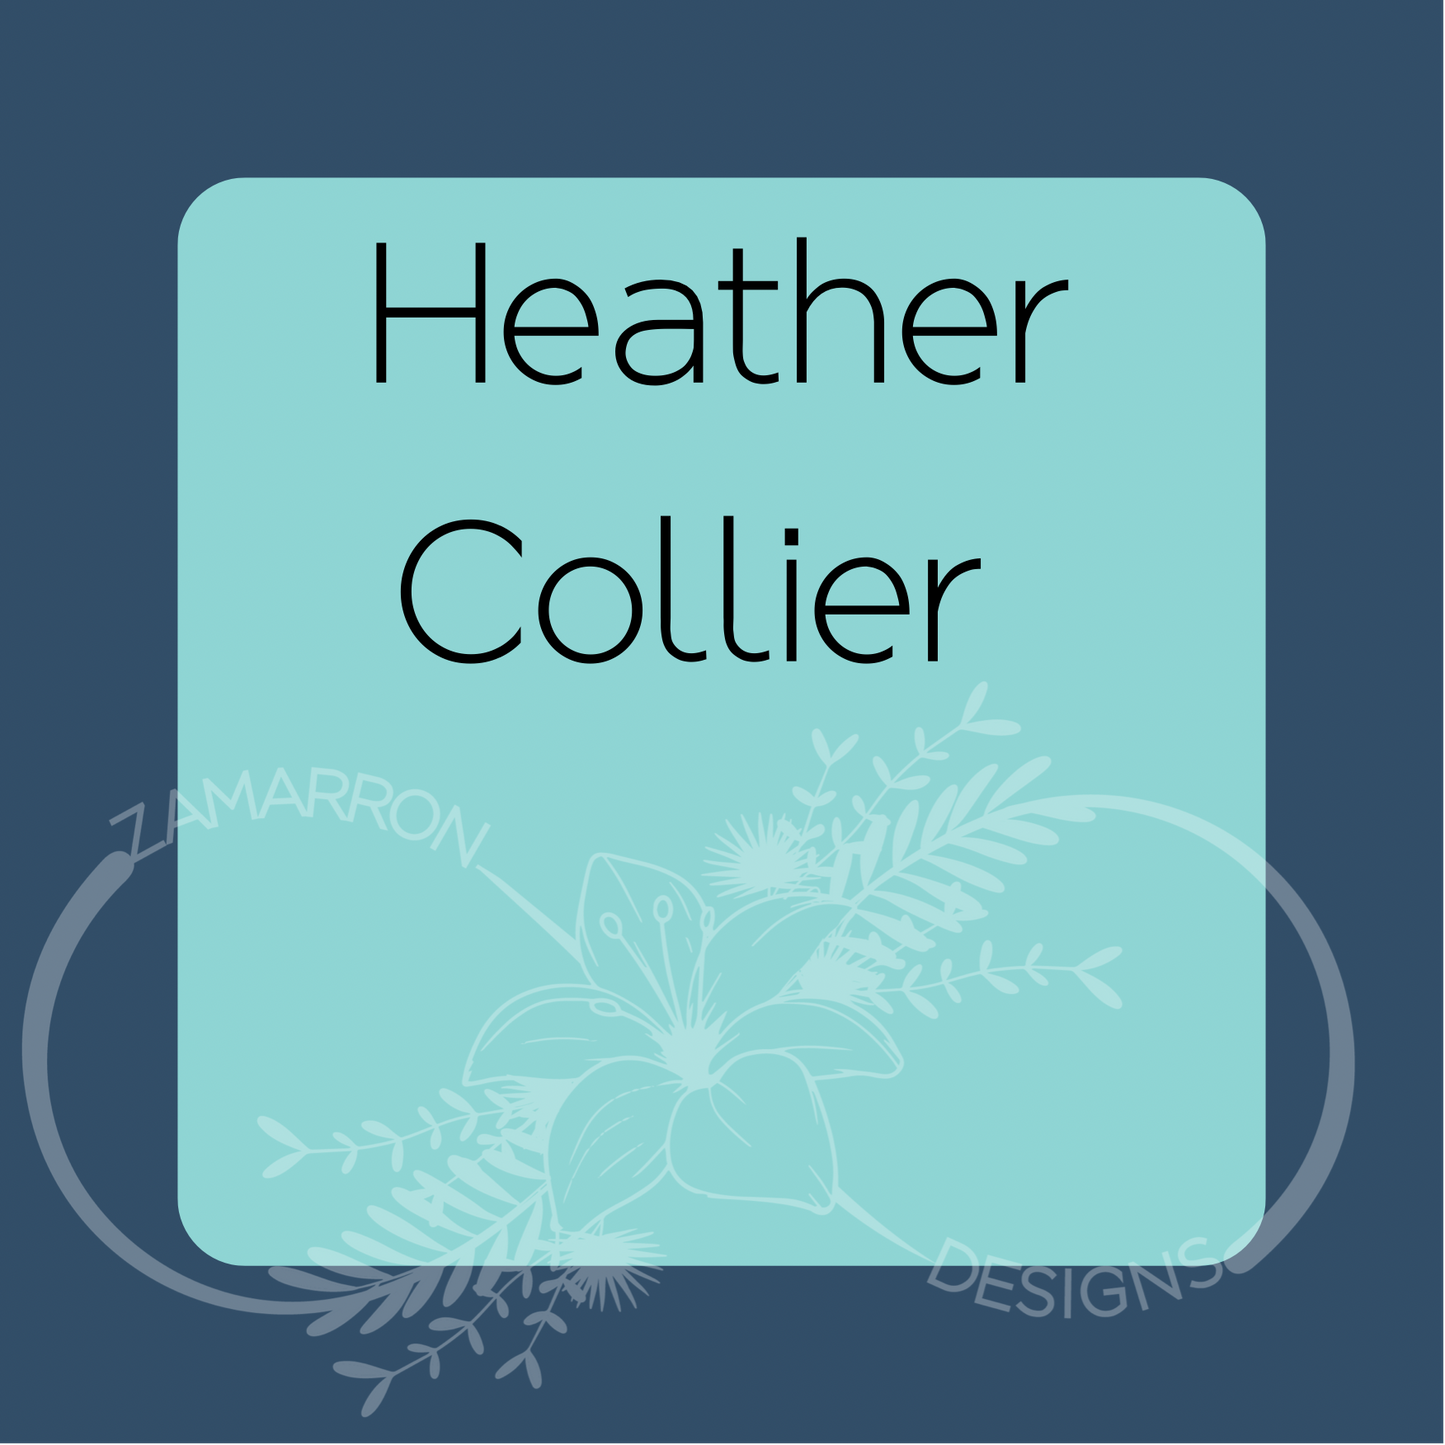 Heather Collier